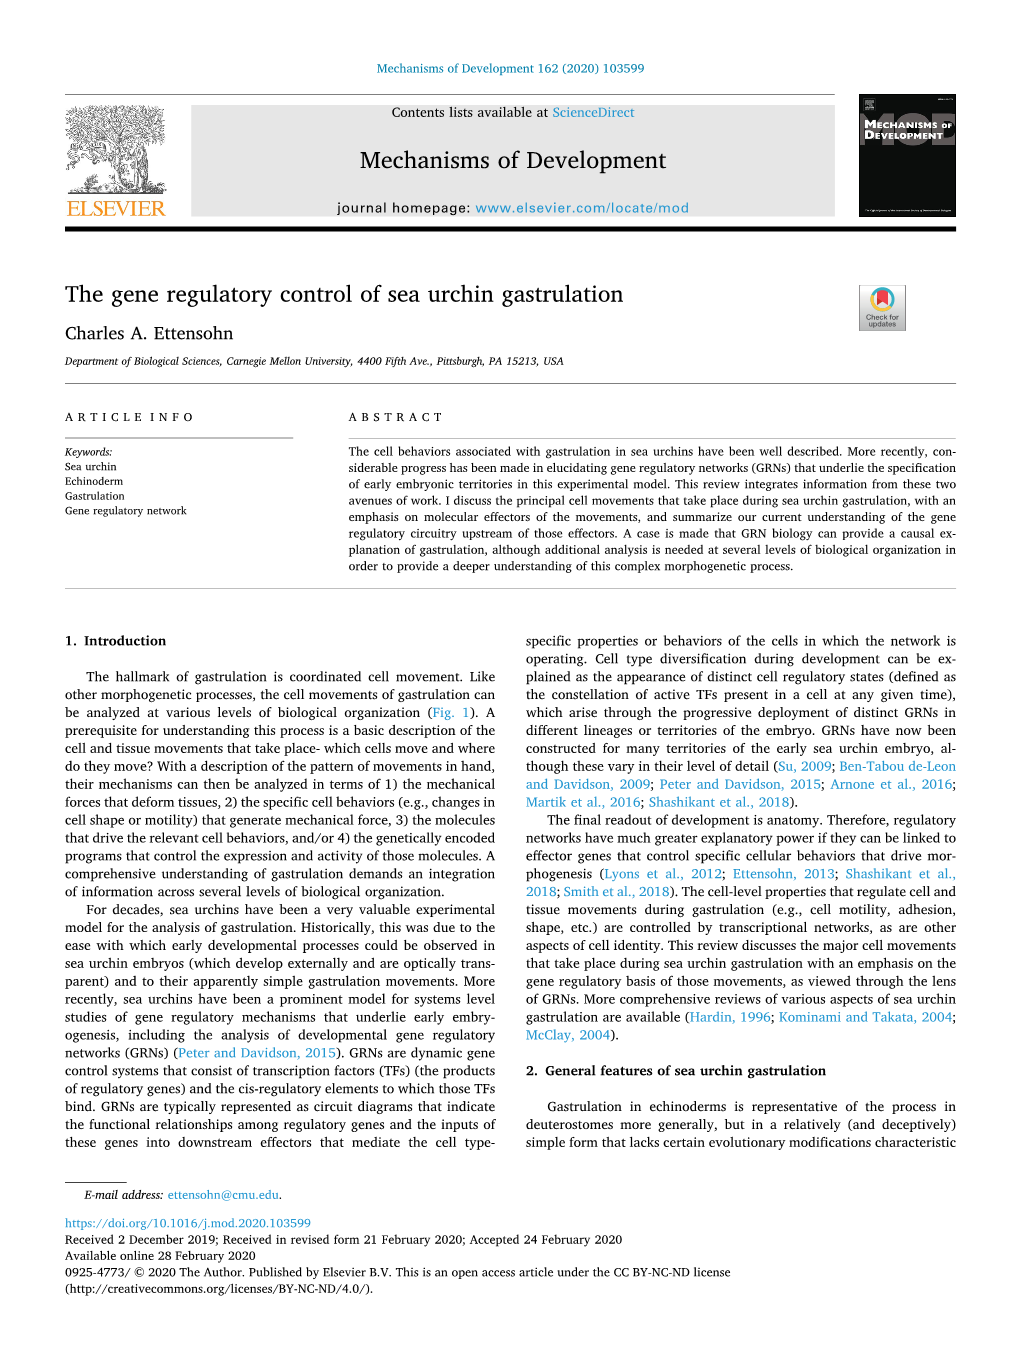 The Gene Regulatory Control of Sea Urchin Gastrulation T Charles A